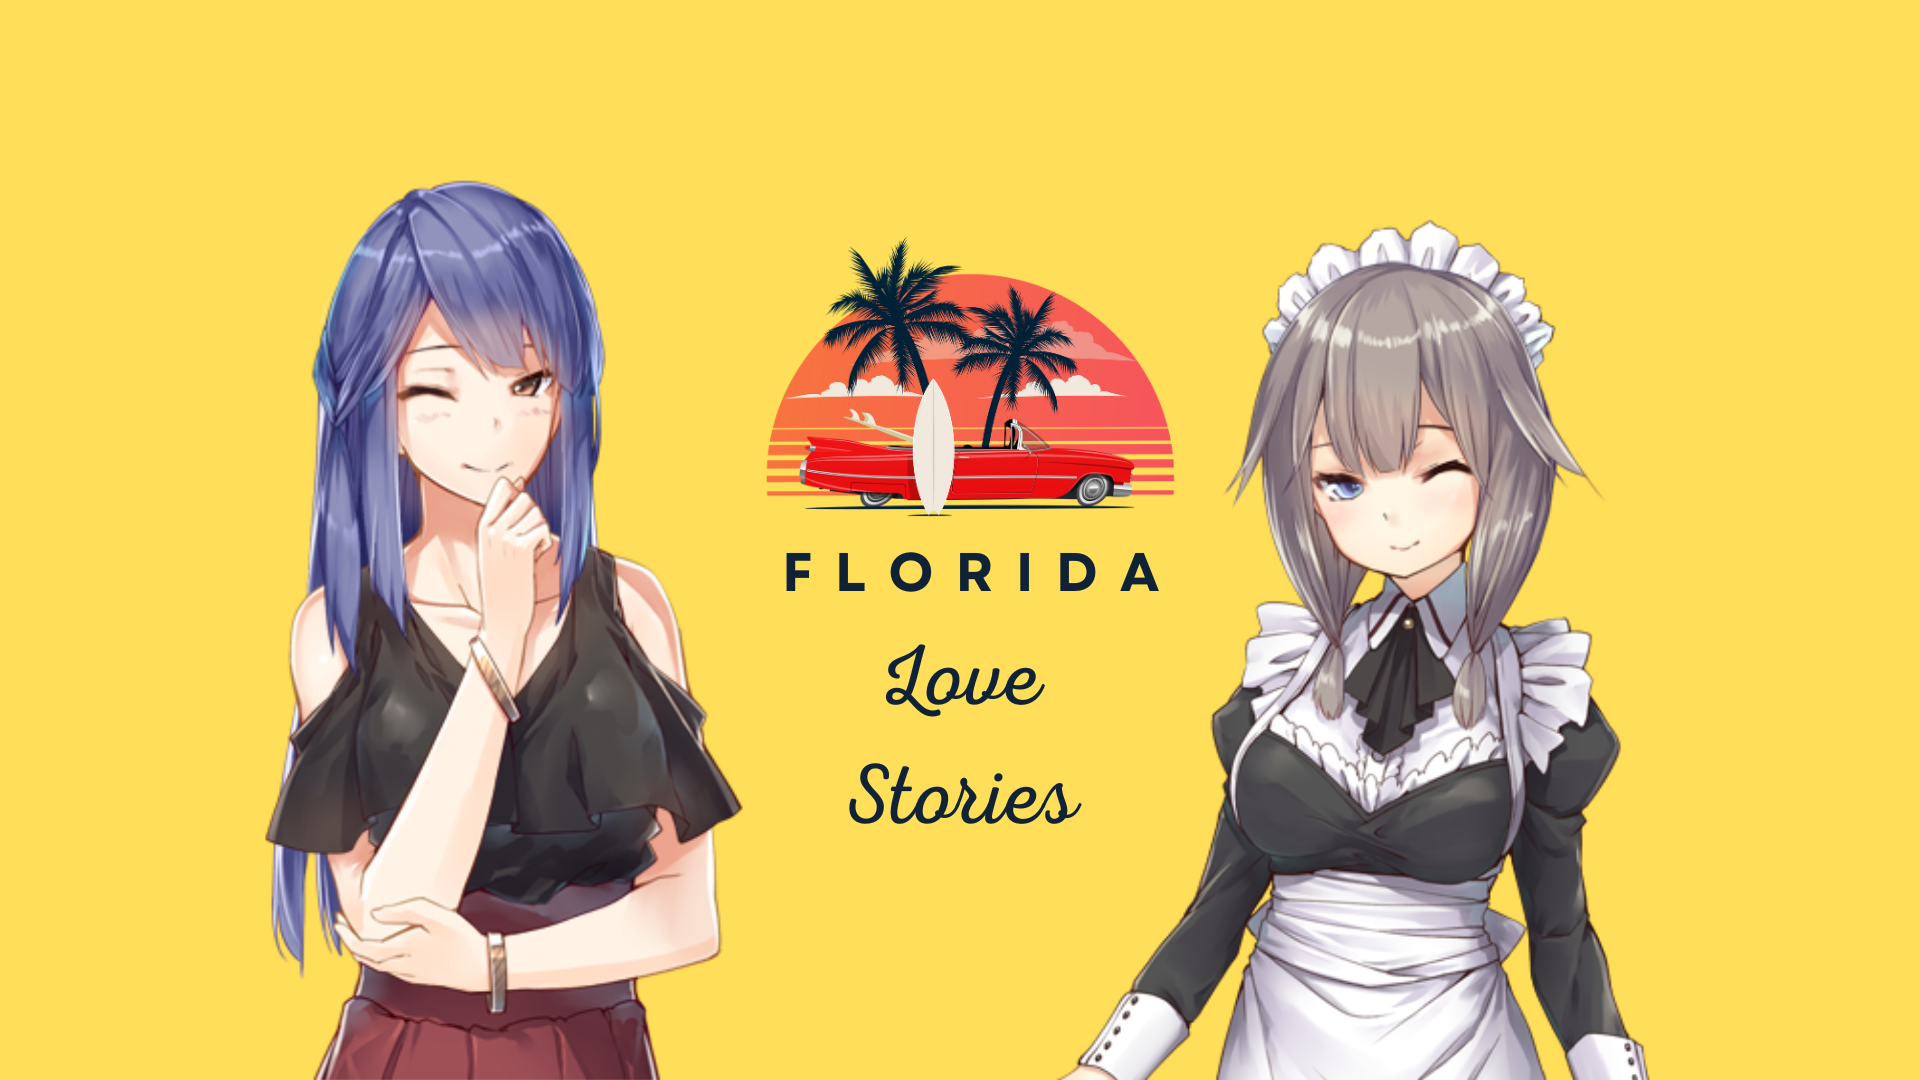 Florida Love Stories